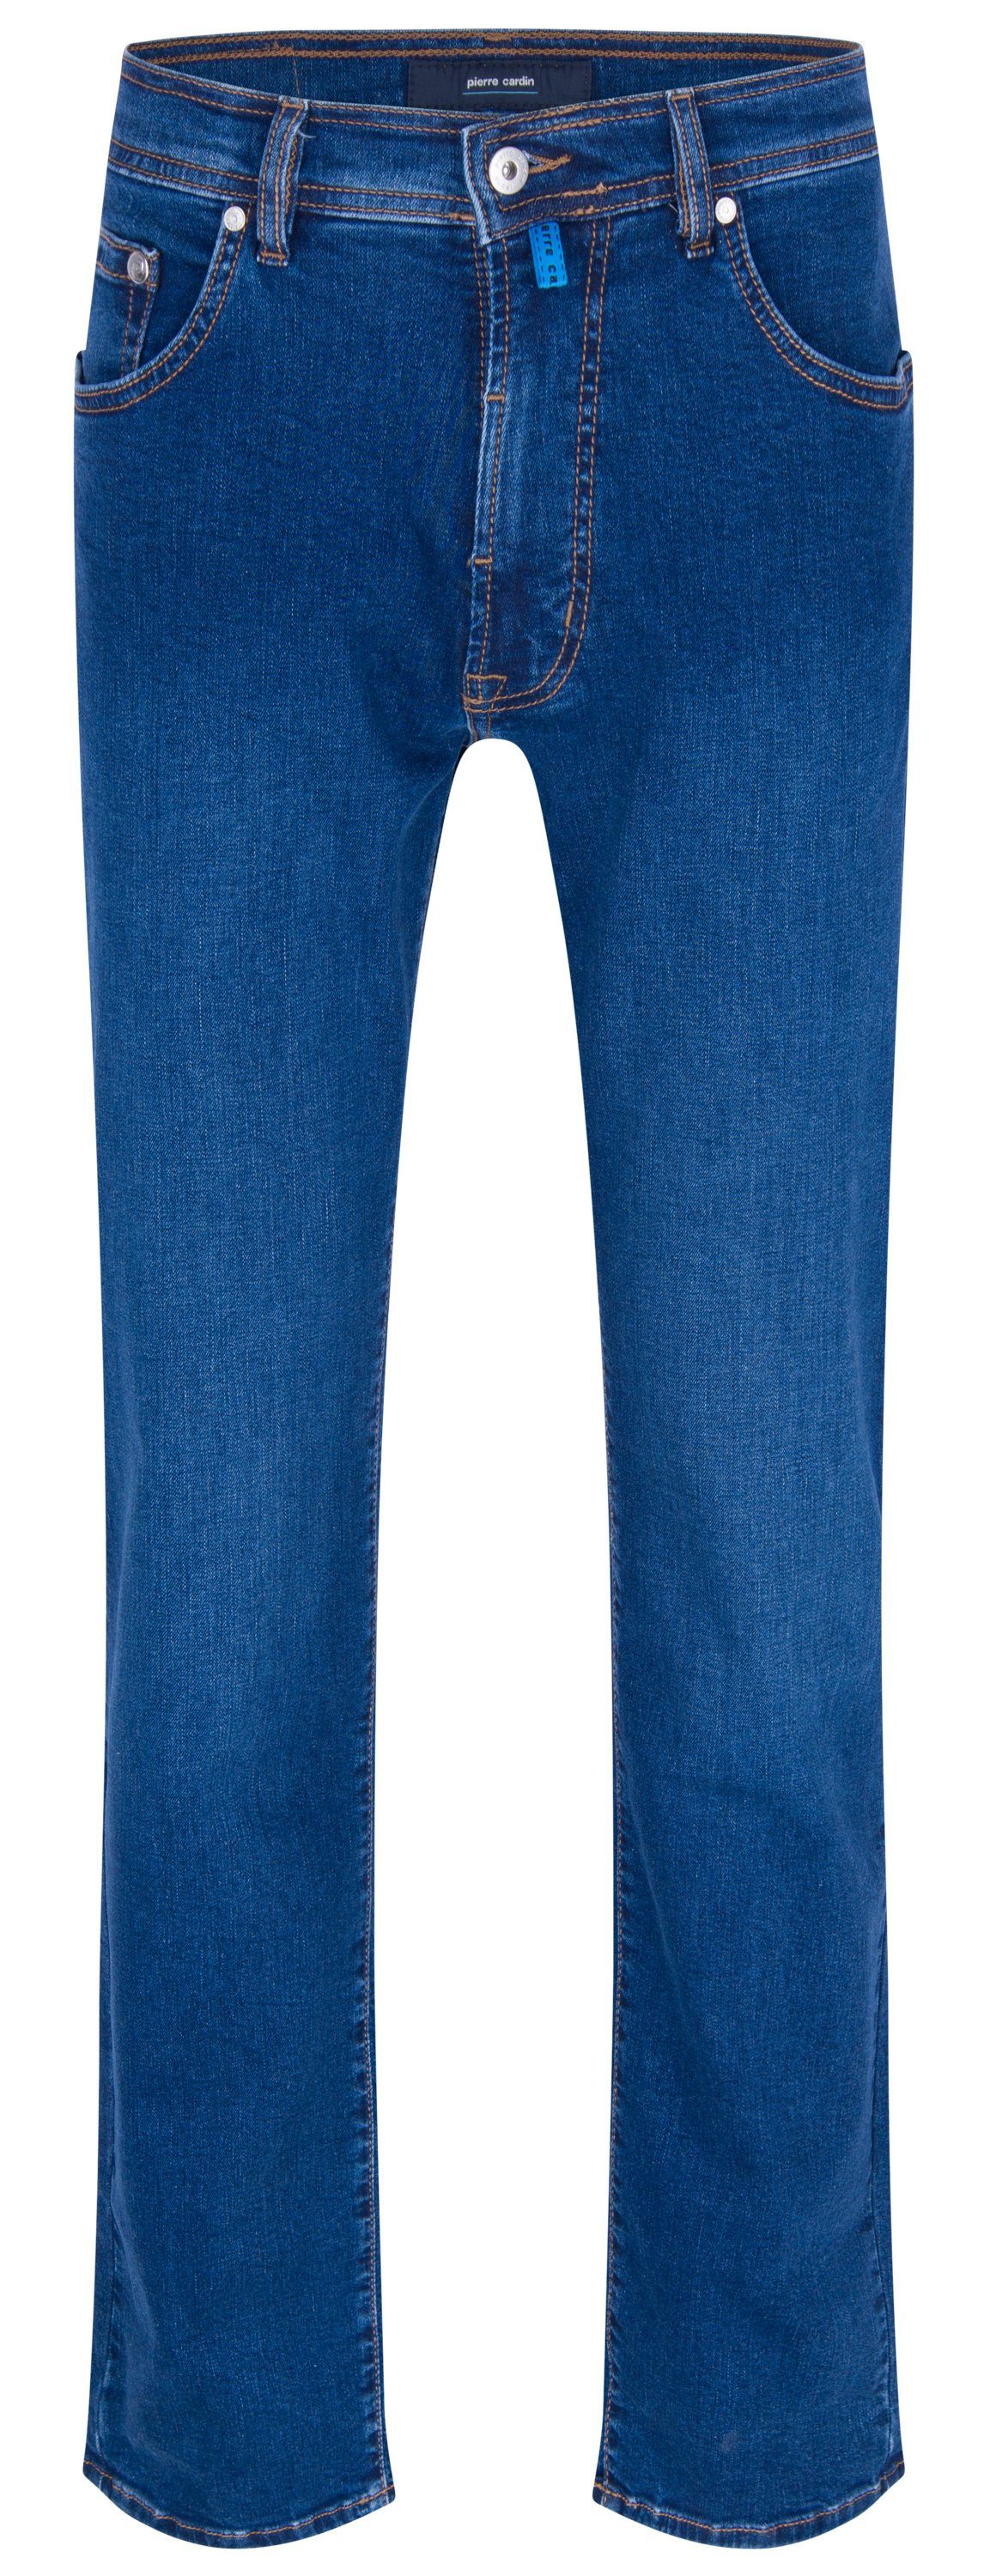 Pierre Cardin 5-Pocket-Jeans PIERRE CARDIN DEAUVILLE blue used 31960 7106.6822 - CLIMA CONTROL